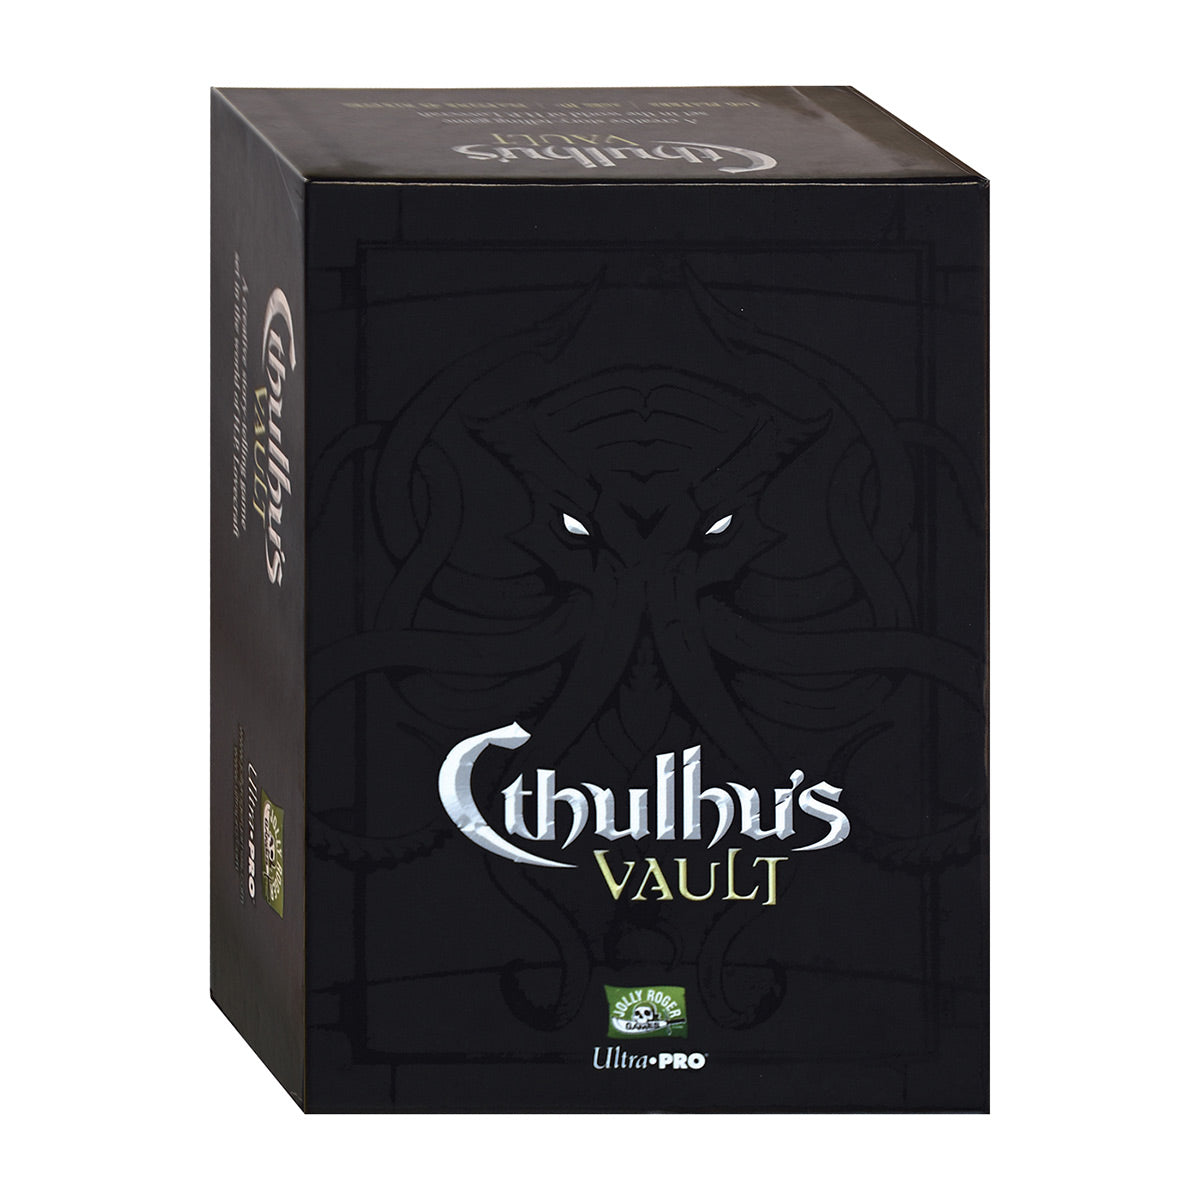 Cthulhu's Vault